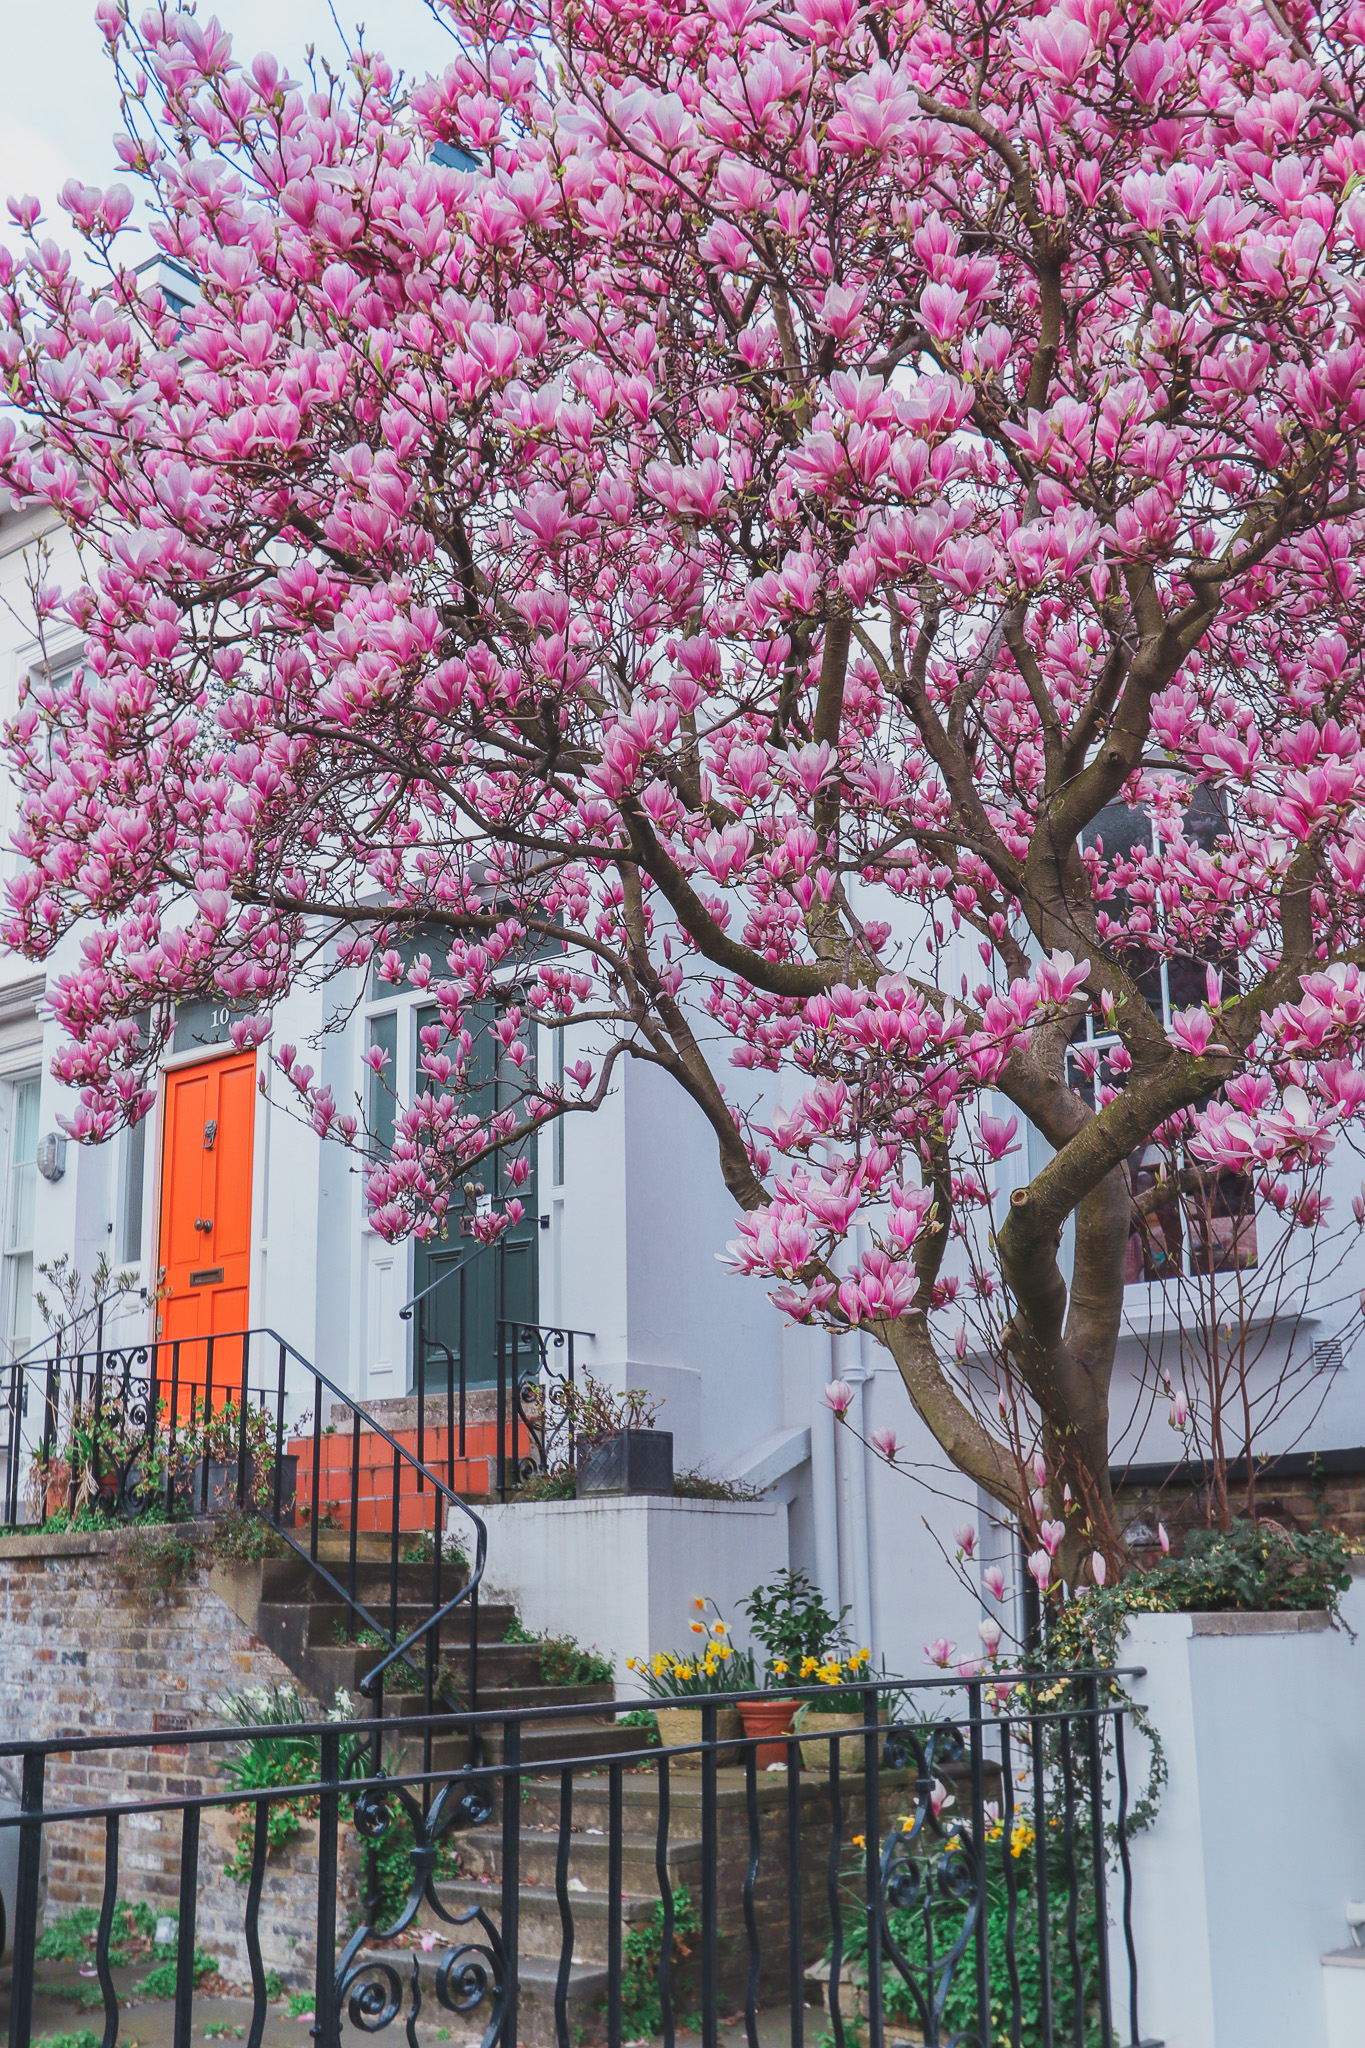 10 Allen Street magnolia blossoms